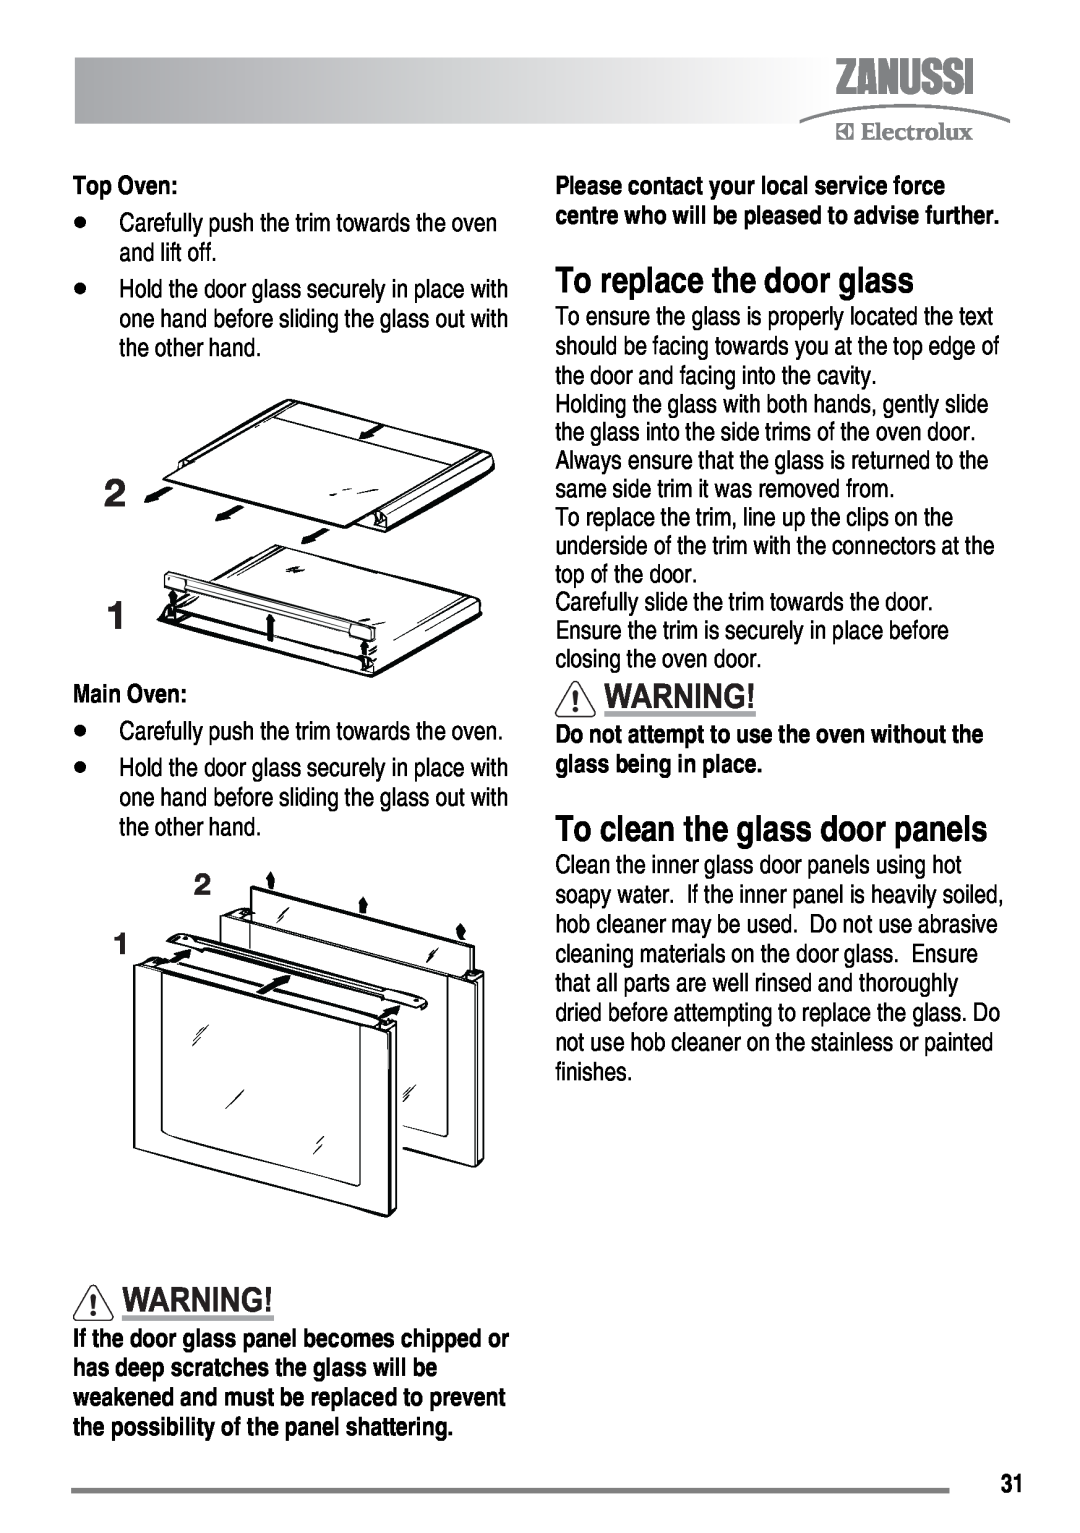 Zanussi ZKT6050 user manual To replace the door glass, To clean the glass door panels, Top Oven, Main Oven 